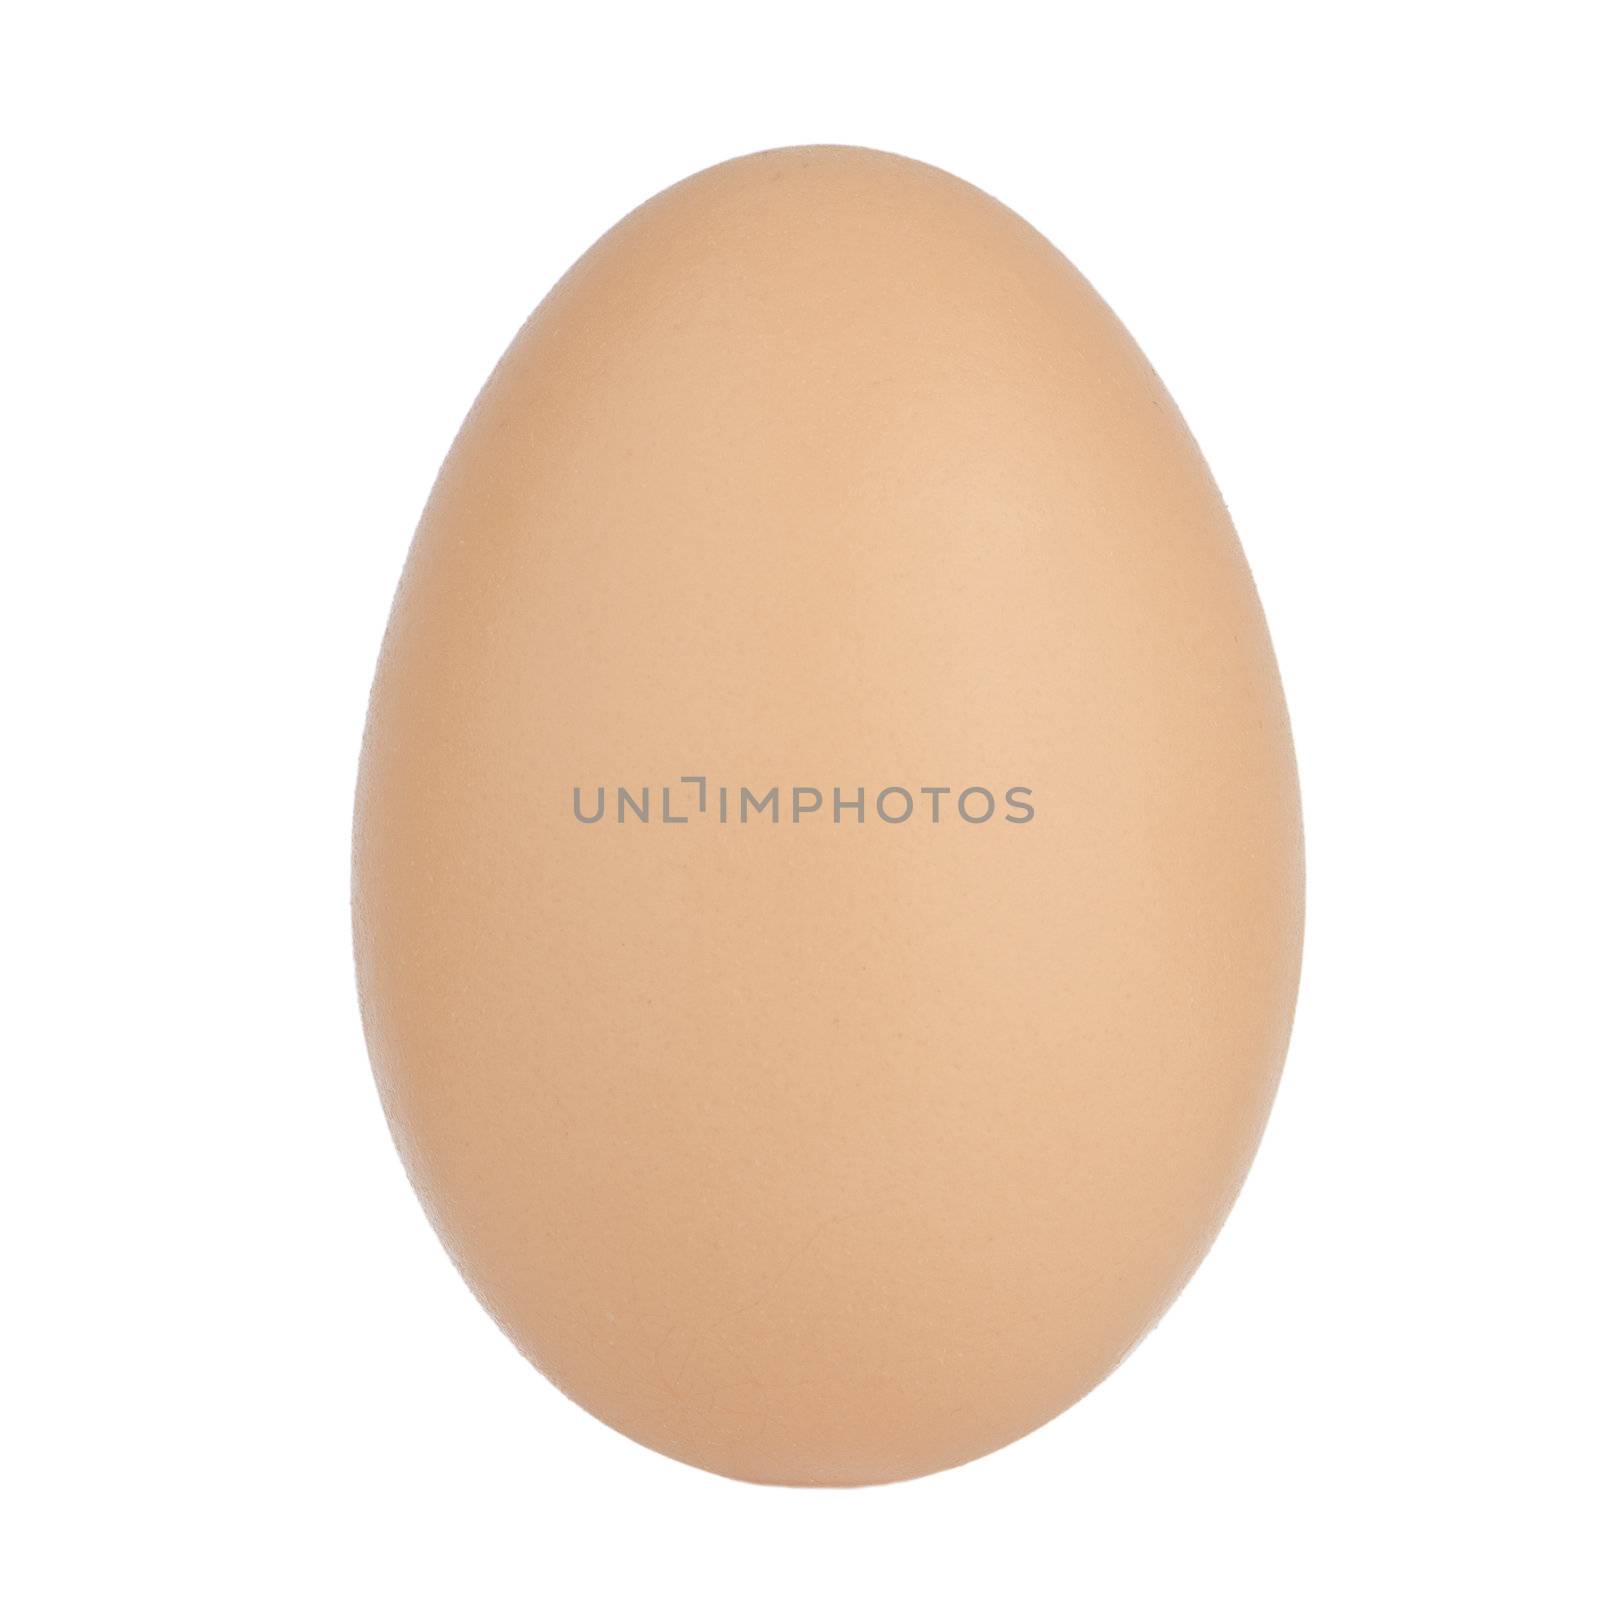 Close up of egg isolated on white background.